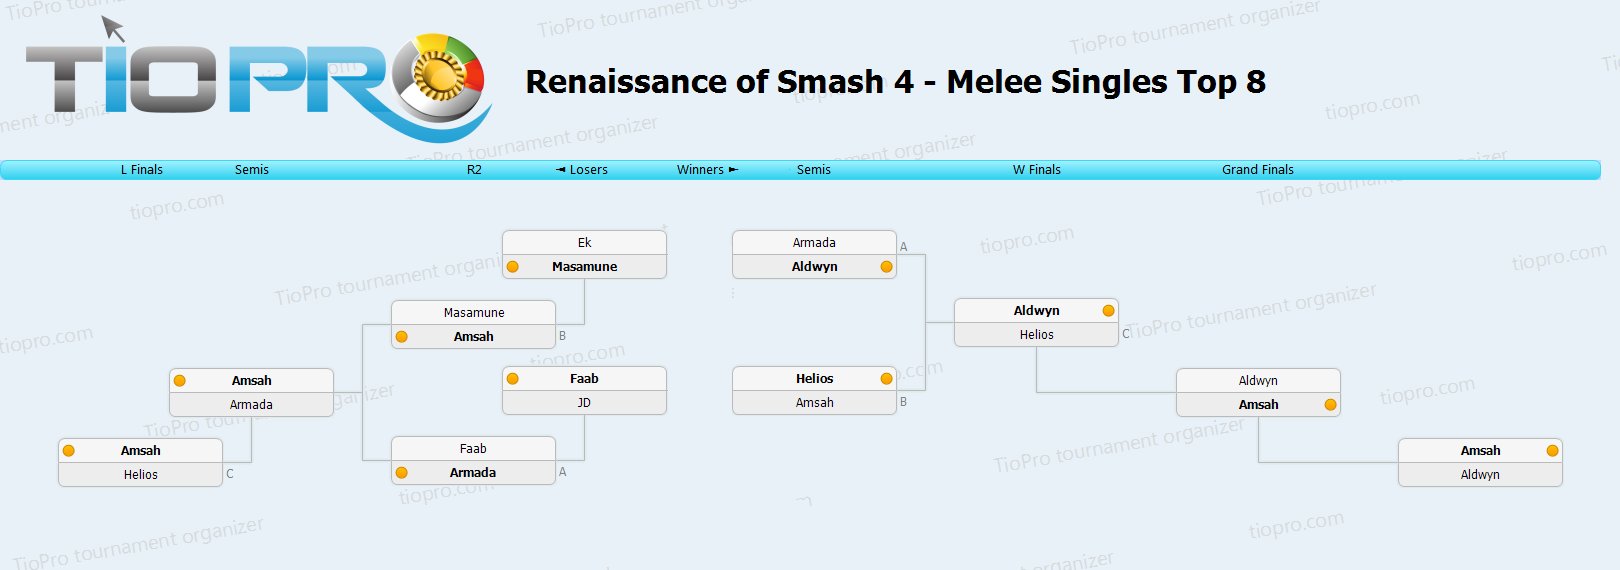 The Renaissance of Smash 4: Melee Singles Bracket